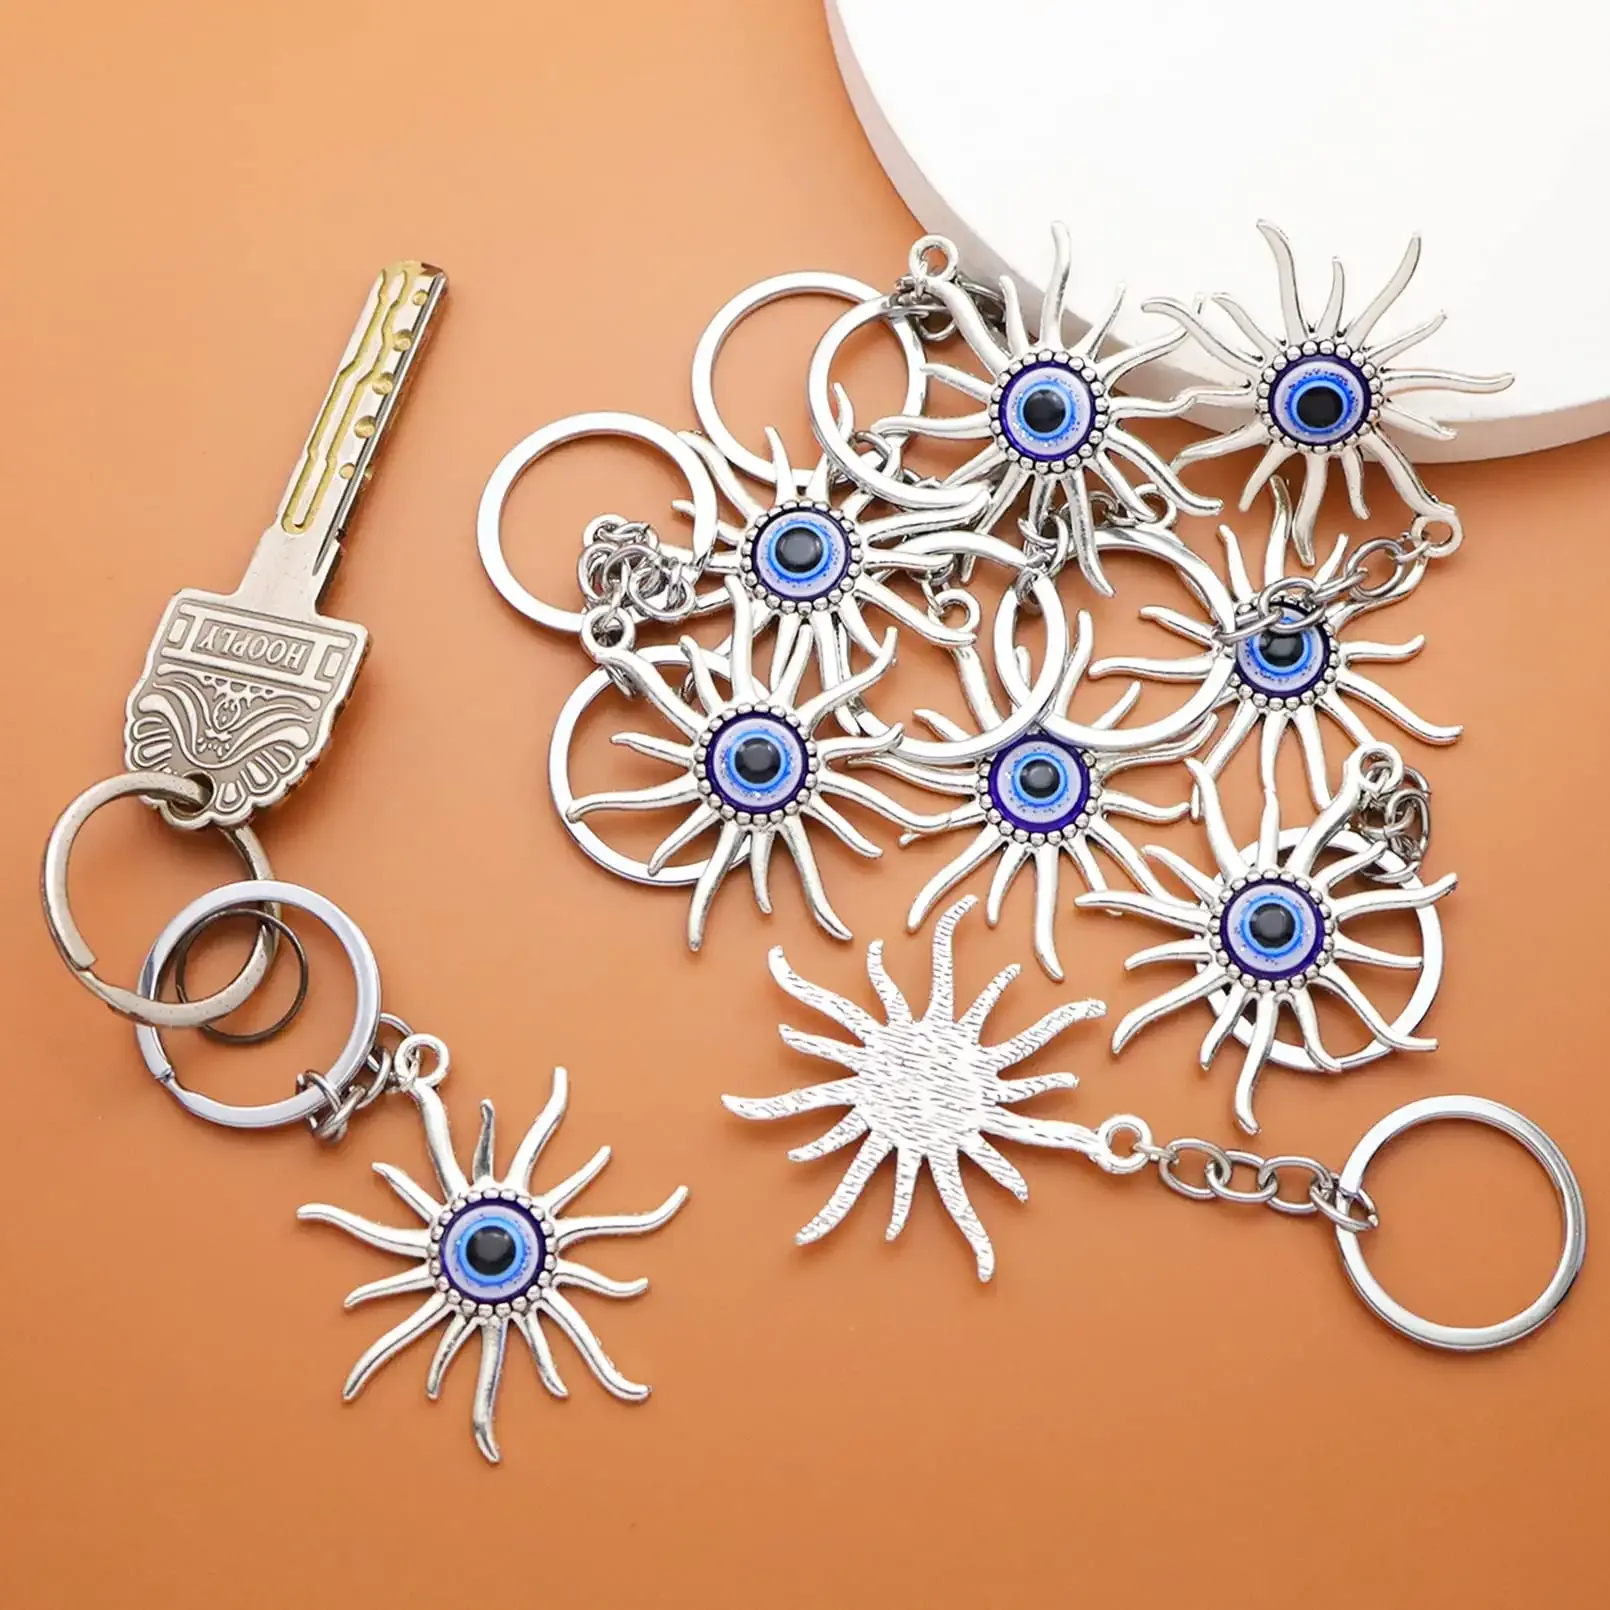 3ml blue evil eye keychain for women cute car keyrings handbag charms good luck amulet key chain gift for girls